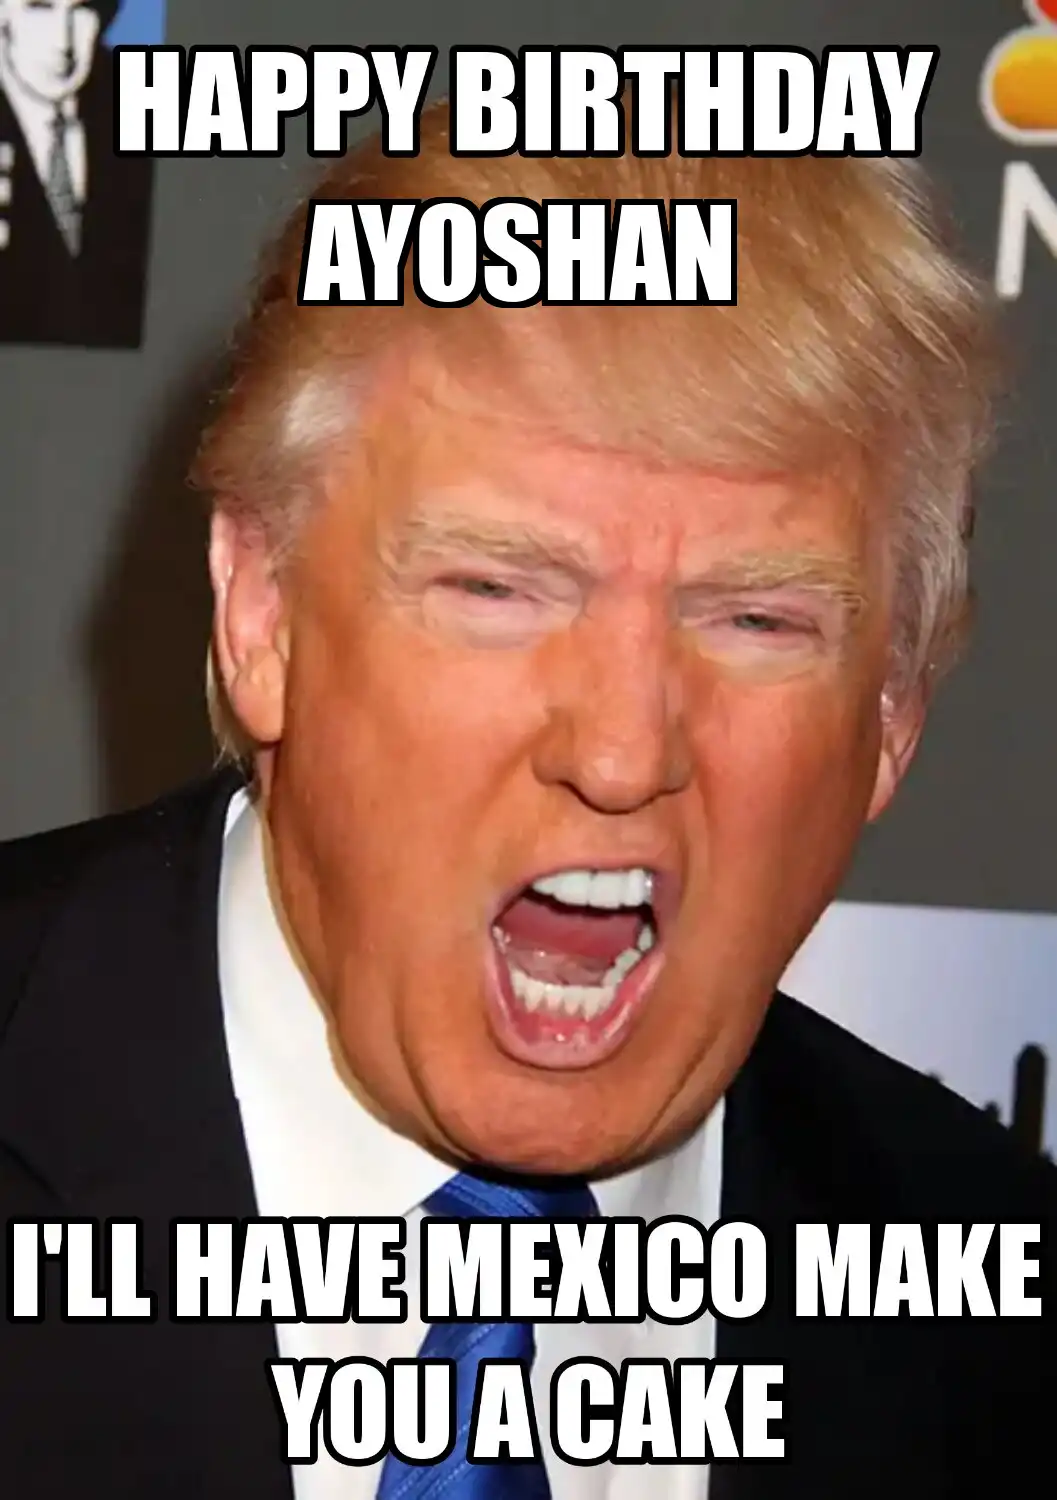 Happy Birthday Ayoshan Mexico Make You A Cake Meme